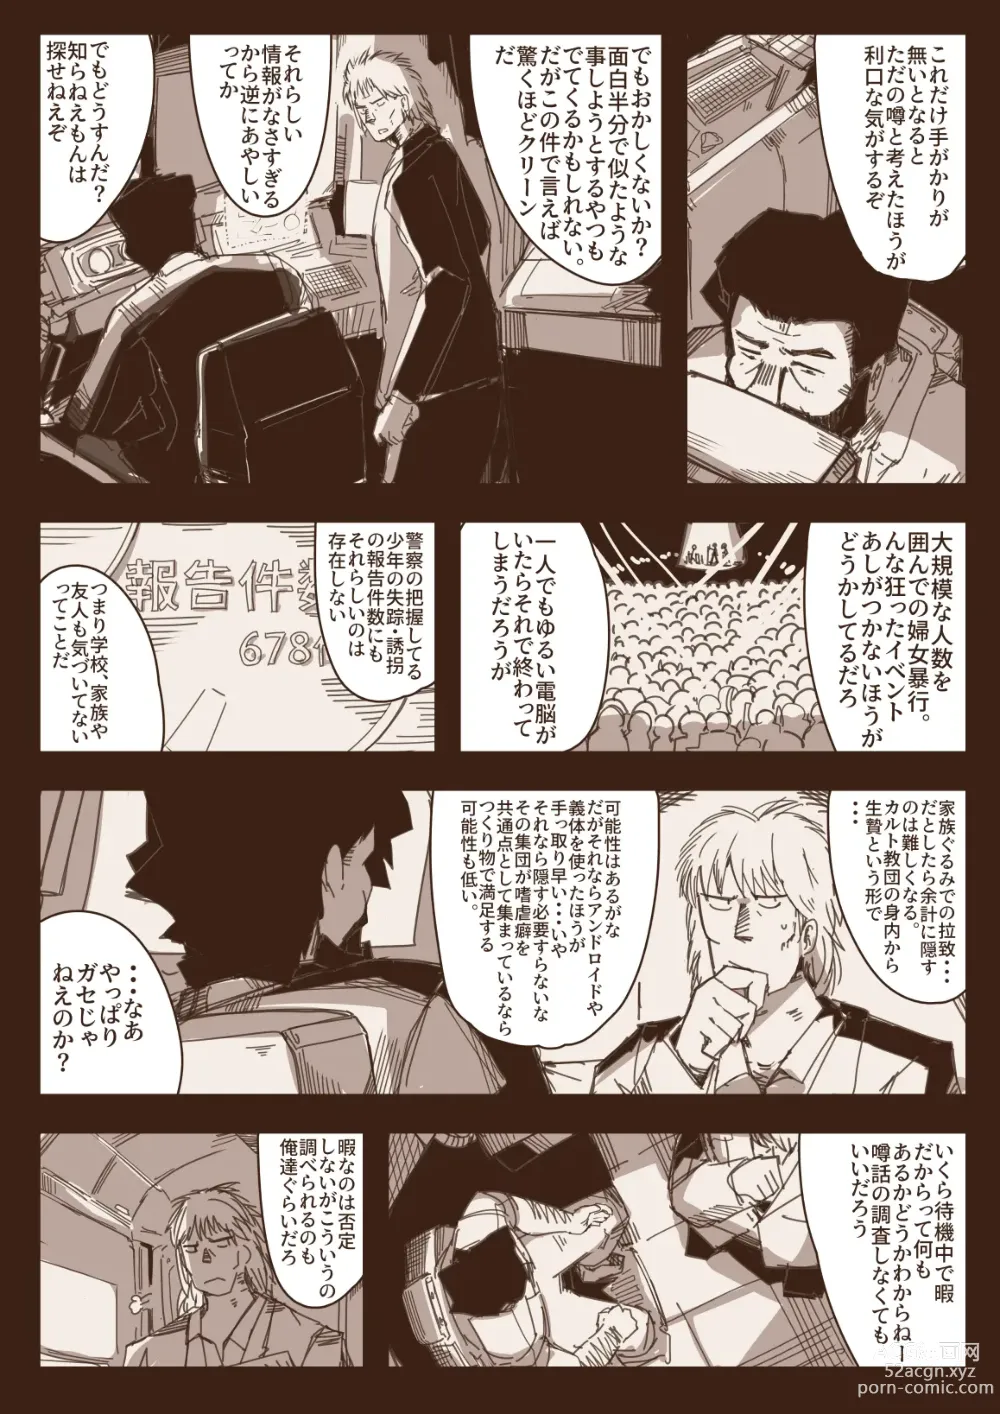 Page 3 of doujinshi Ryona no Kane 2020